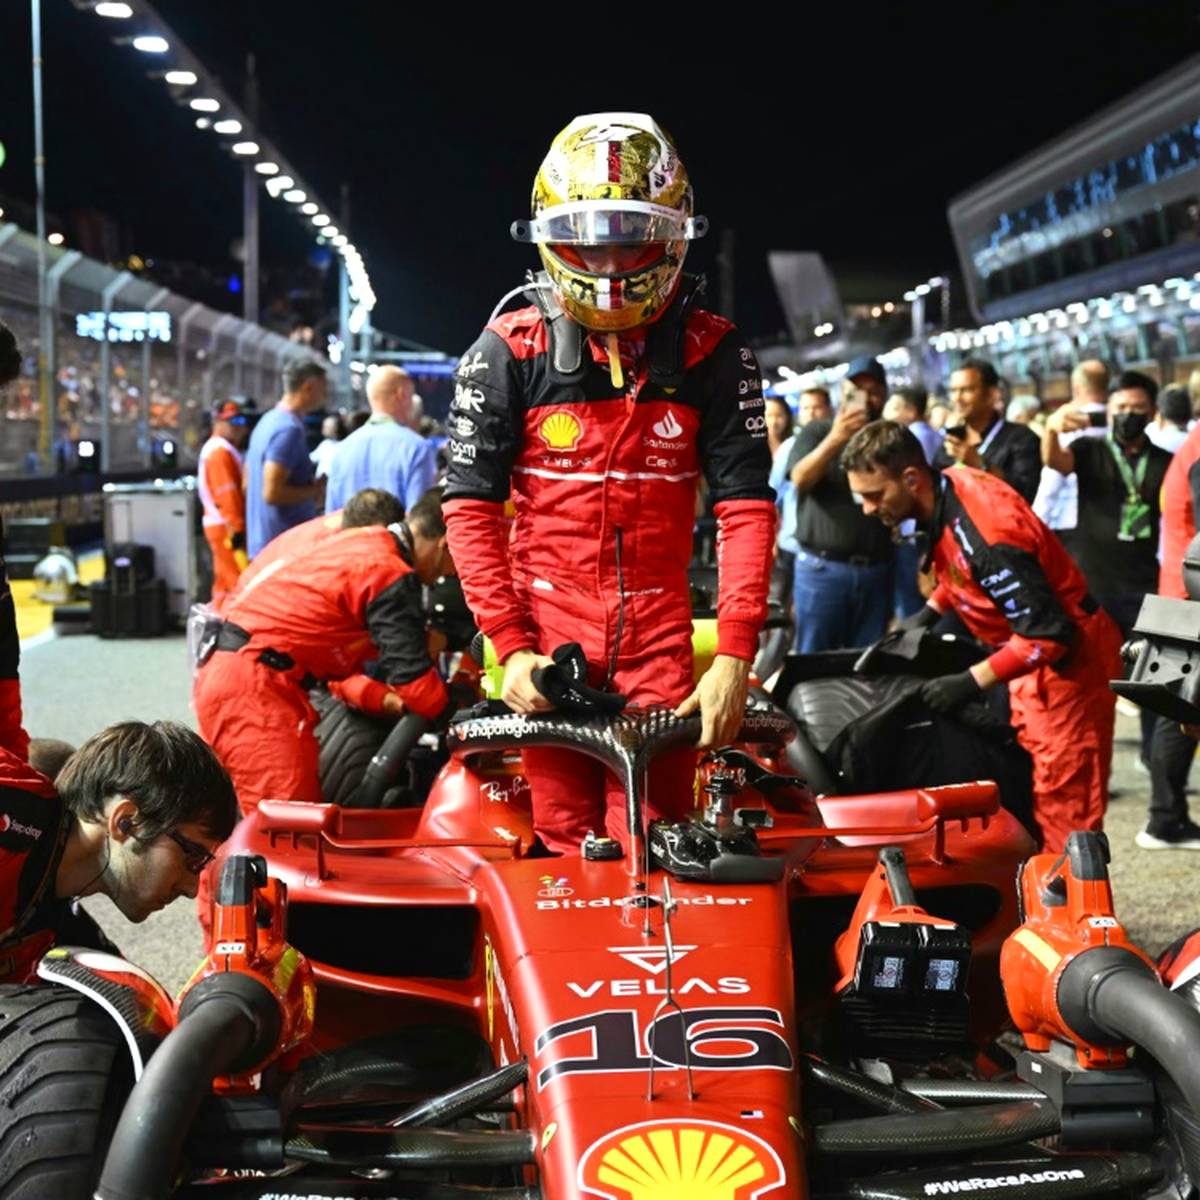 Ferrari-Pilot Charles Leclerc wünscht sich einen Rentenvertrag bei der Scuderia. Für die Saison 2023 peilt er den WM-Titel an.